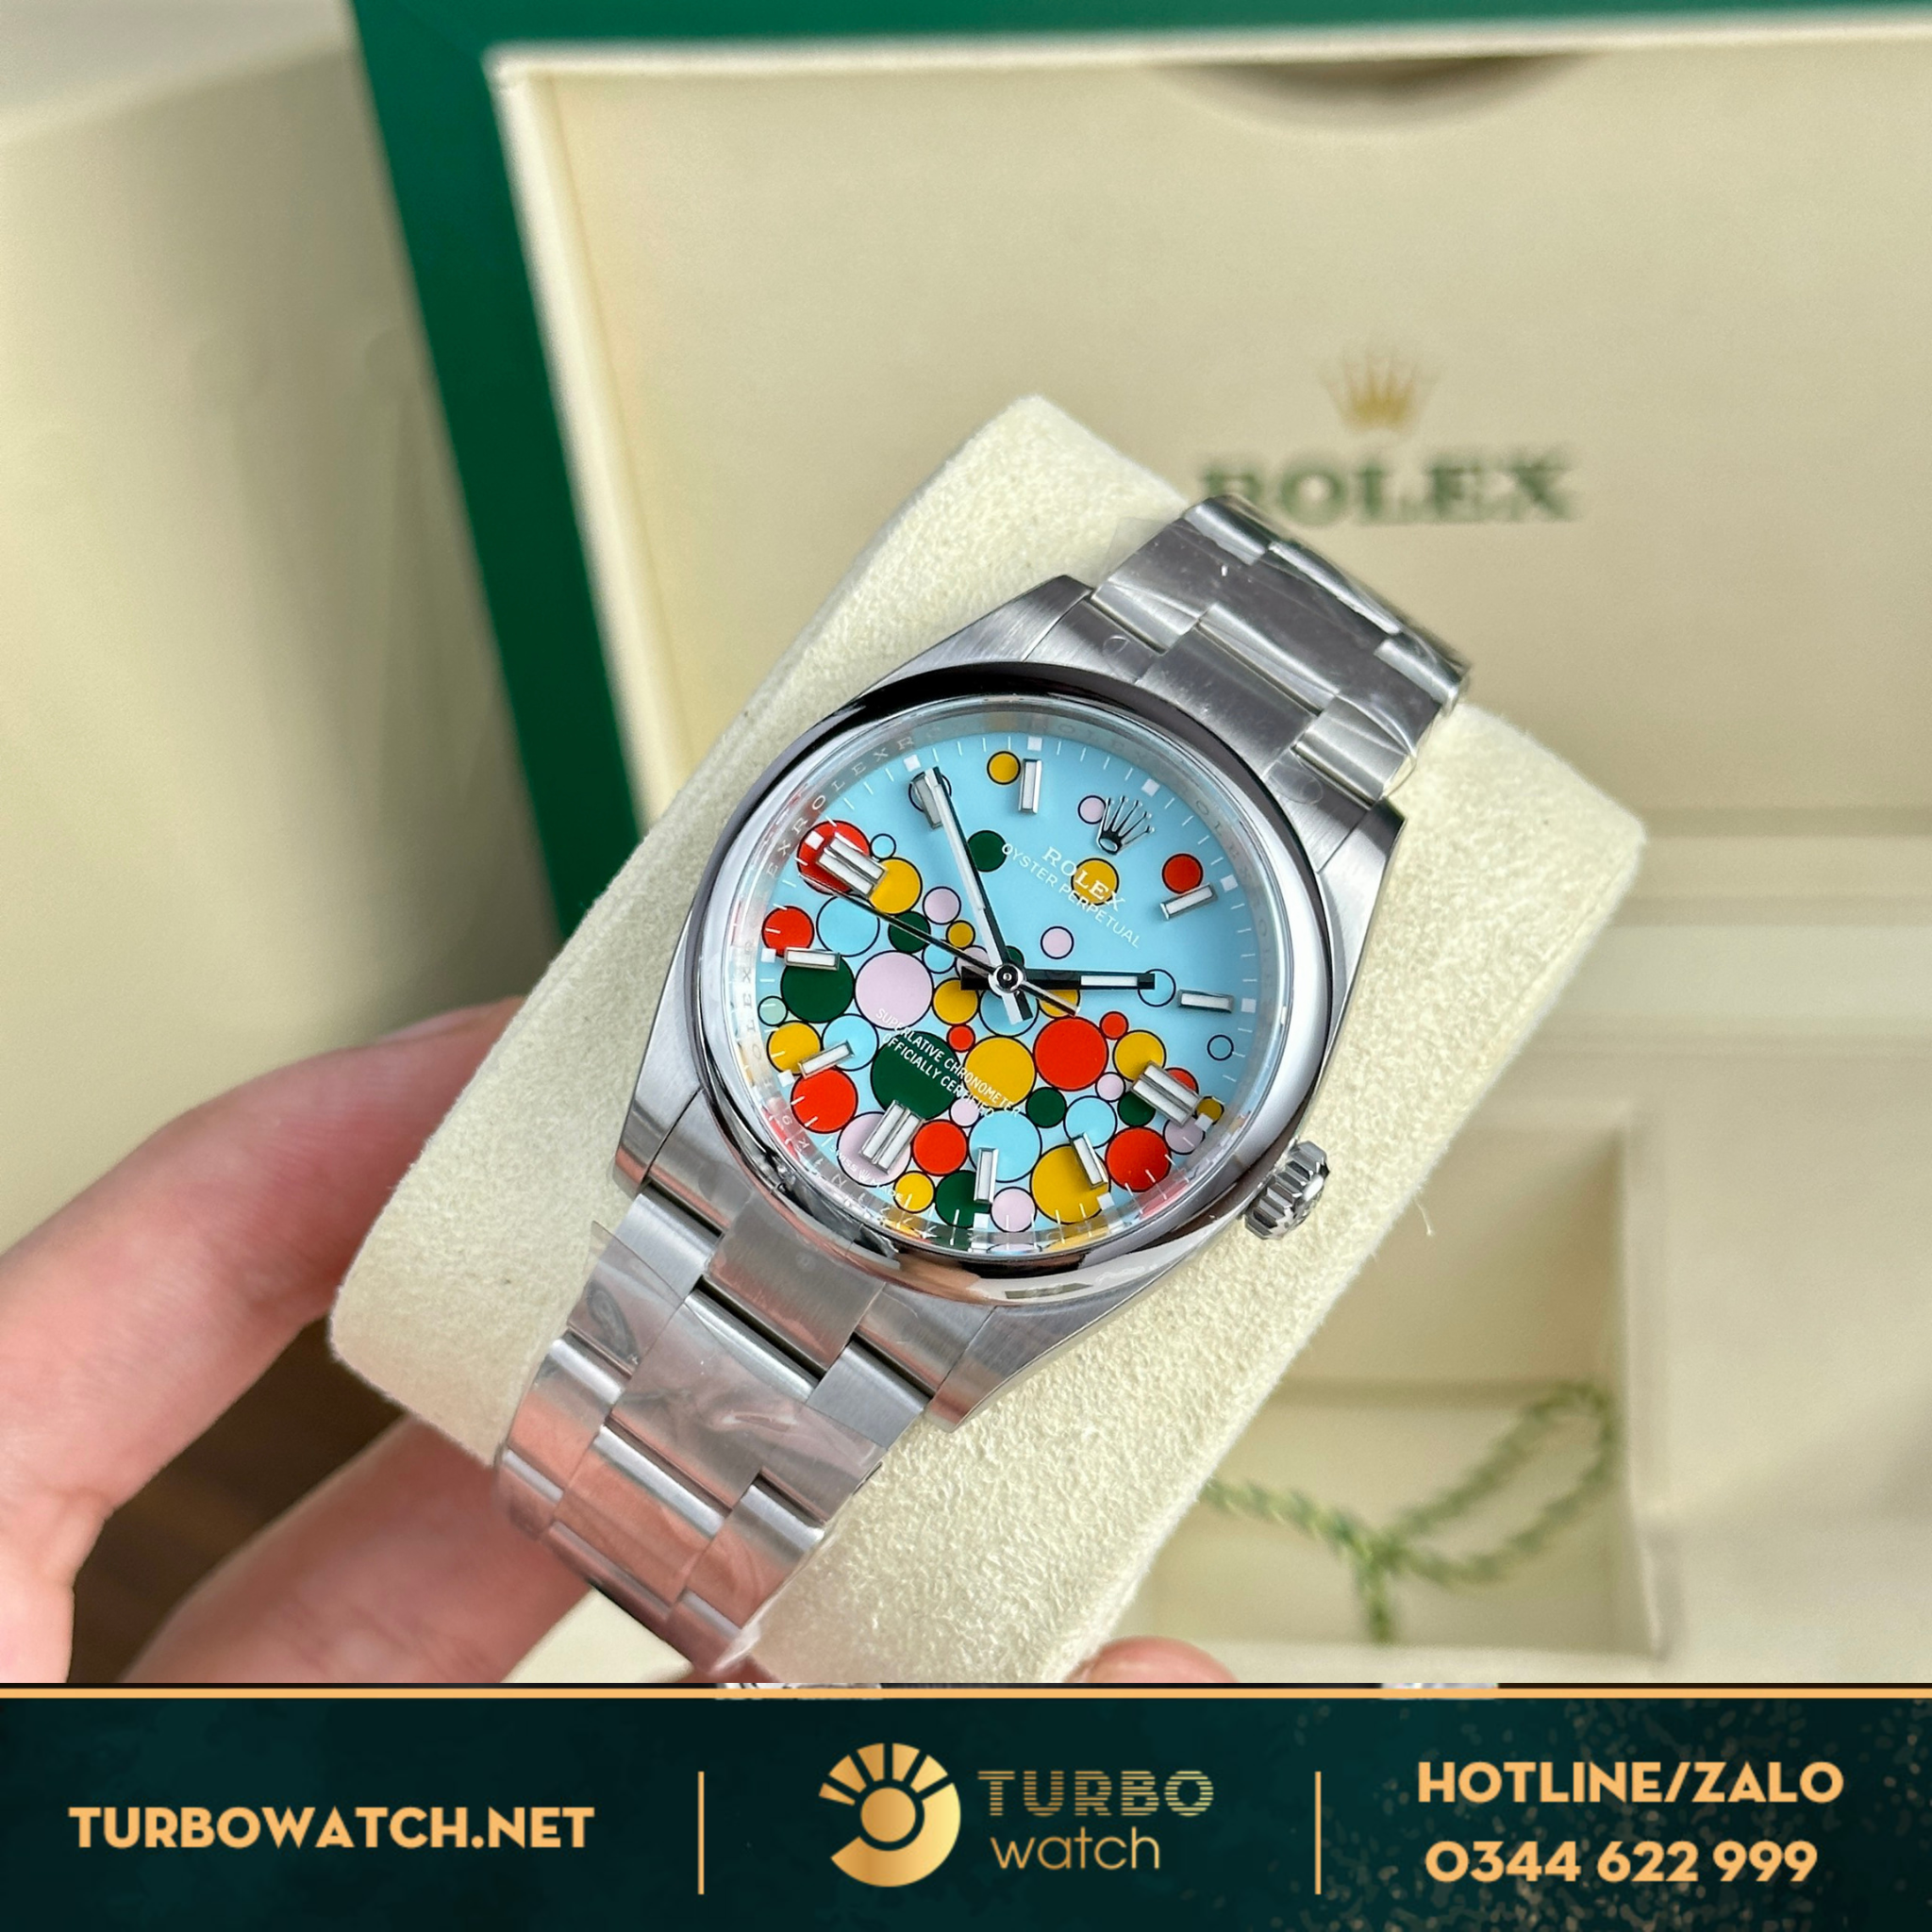 Đồng hồ Rolex Oyster Perpetual 126000 36mm mặt số xanh lam hoạ tiết celebration rep 1:1 